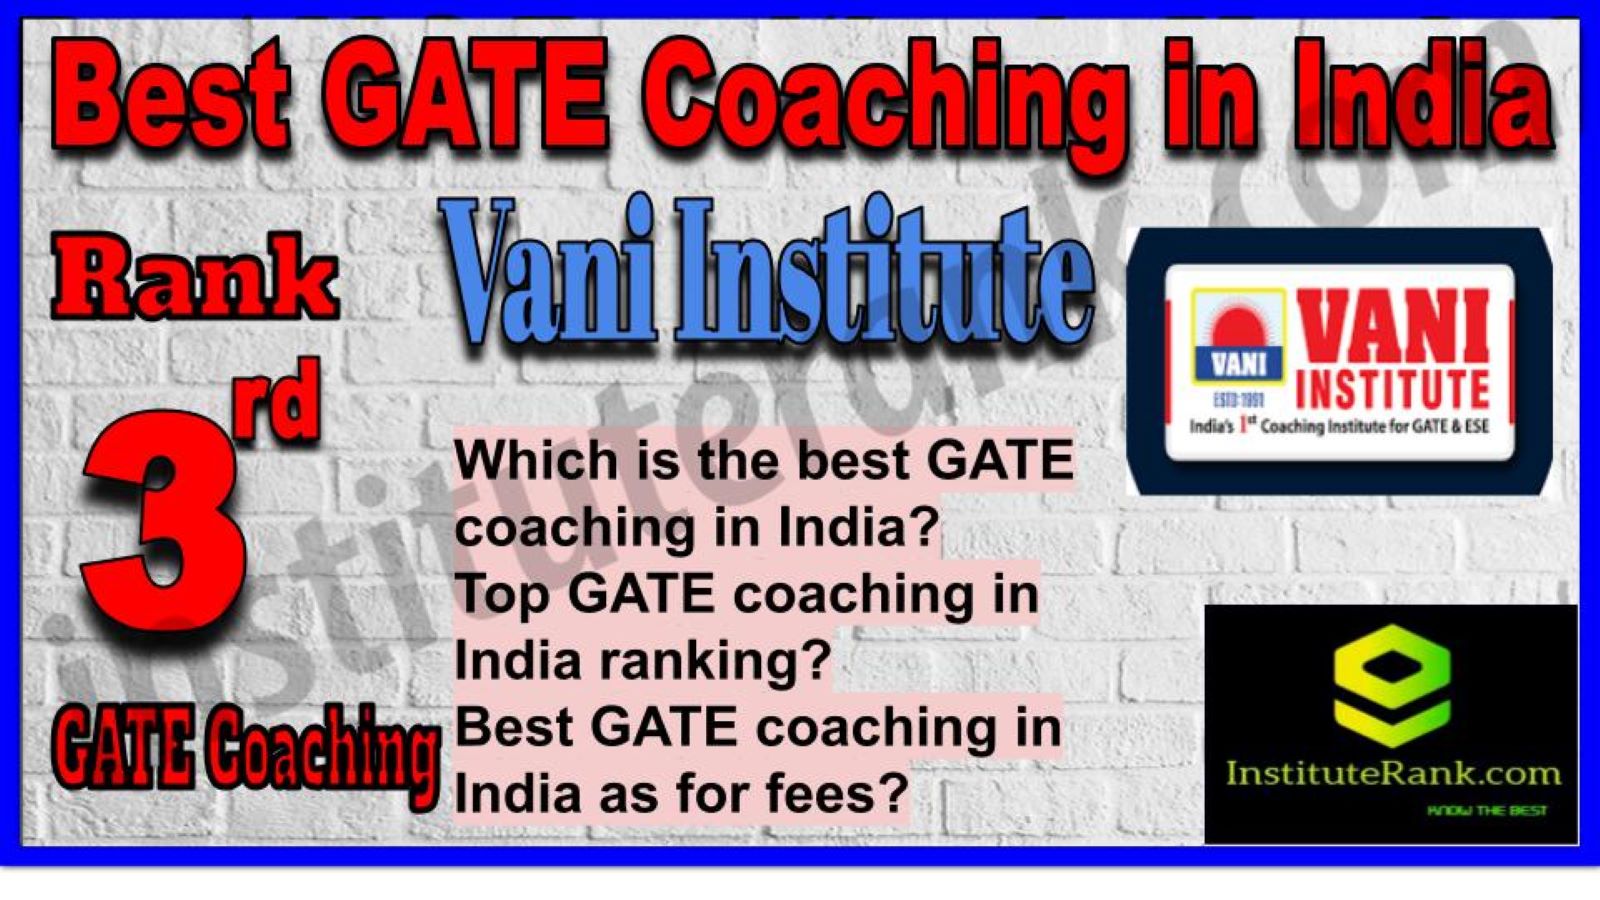 Rank 3 Best GATE Coaching in India